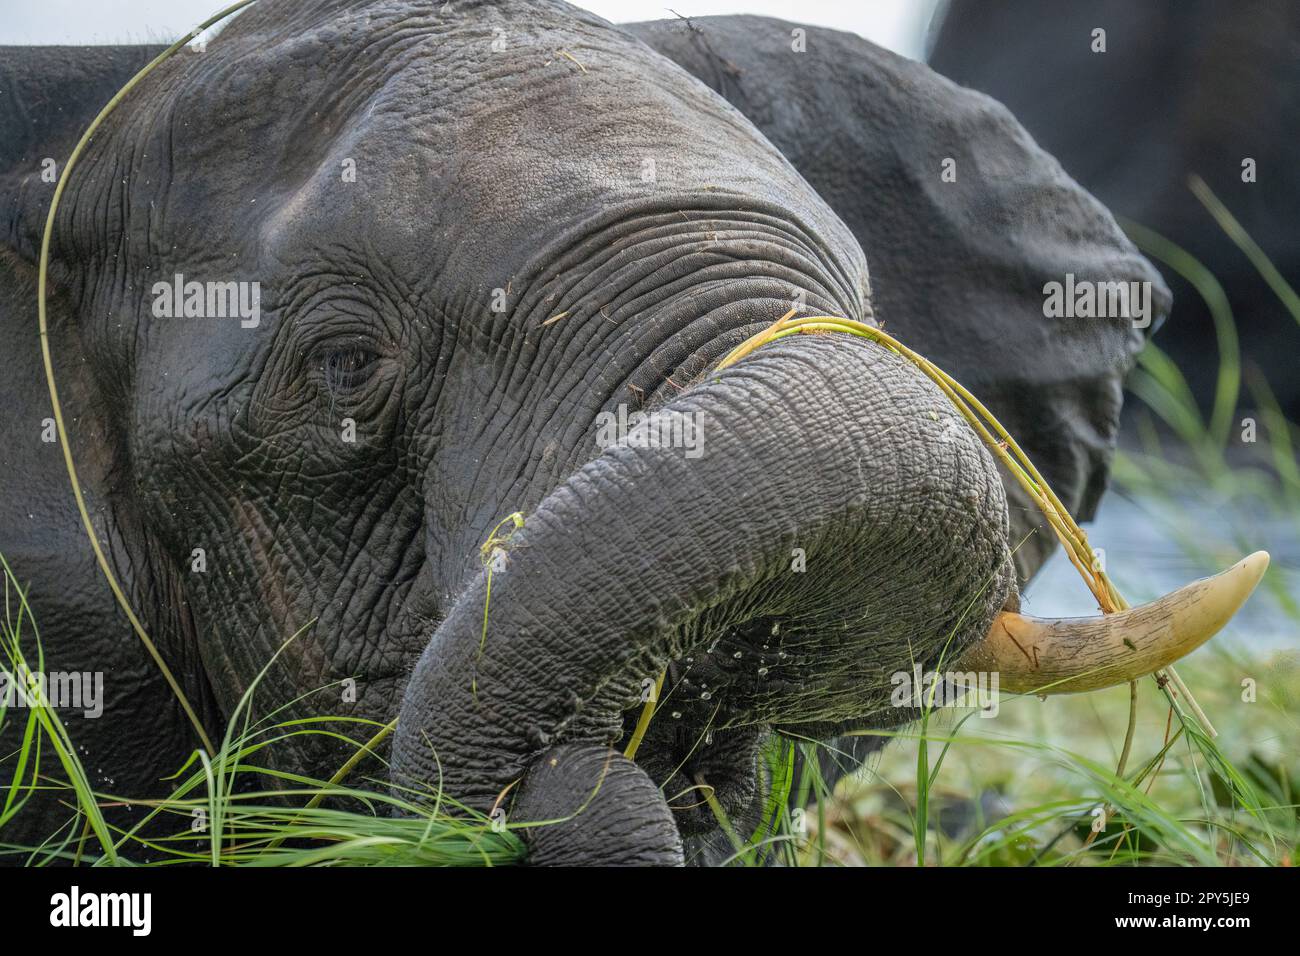 Close-up of African bush elephant twisting trunk Stock Photo